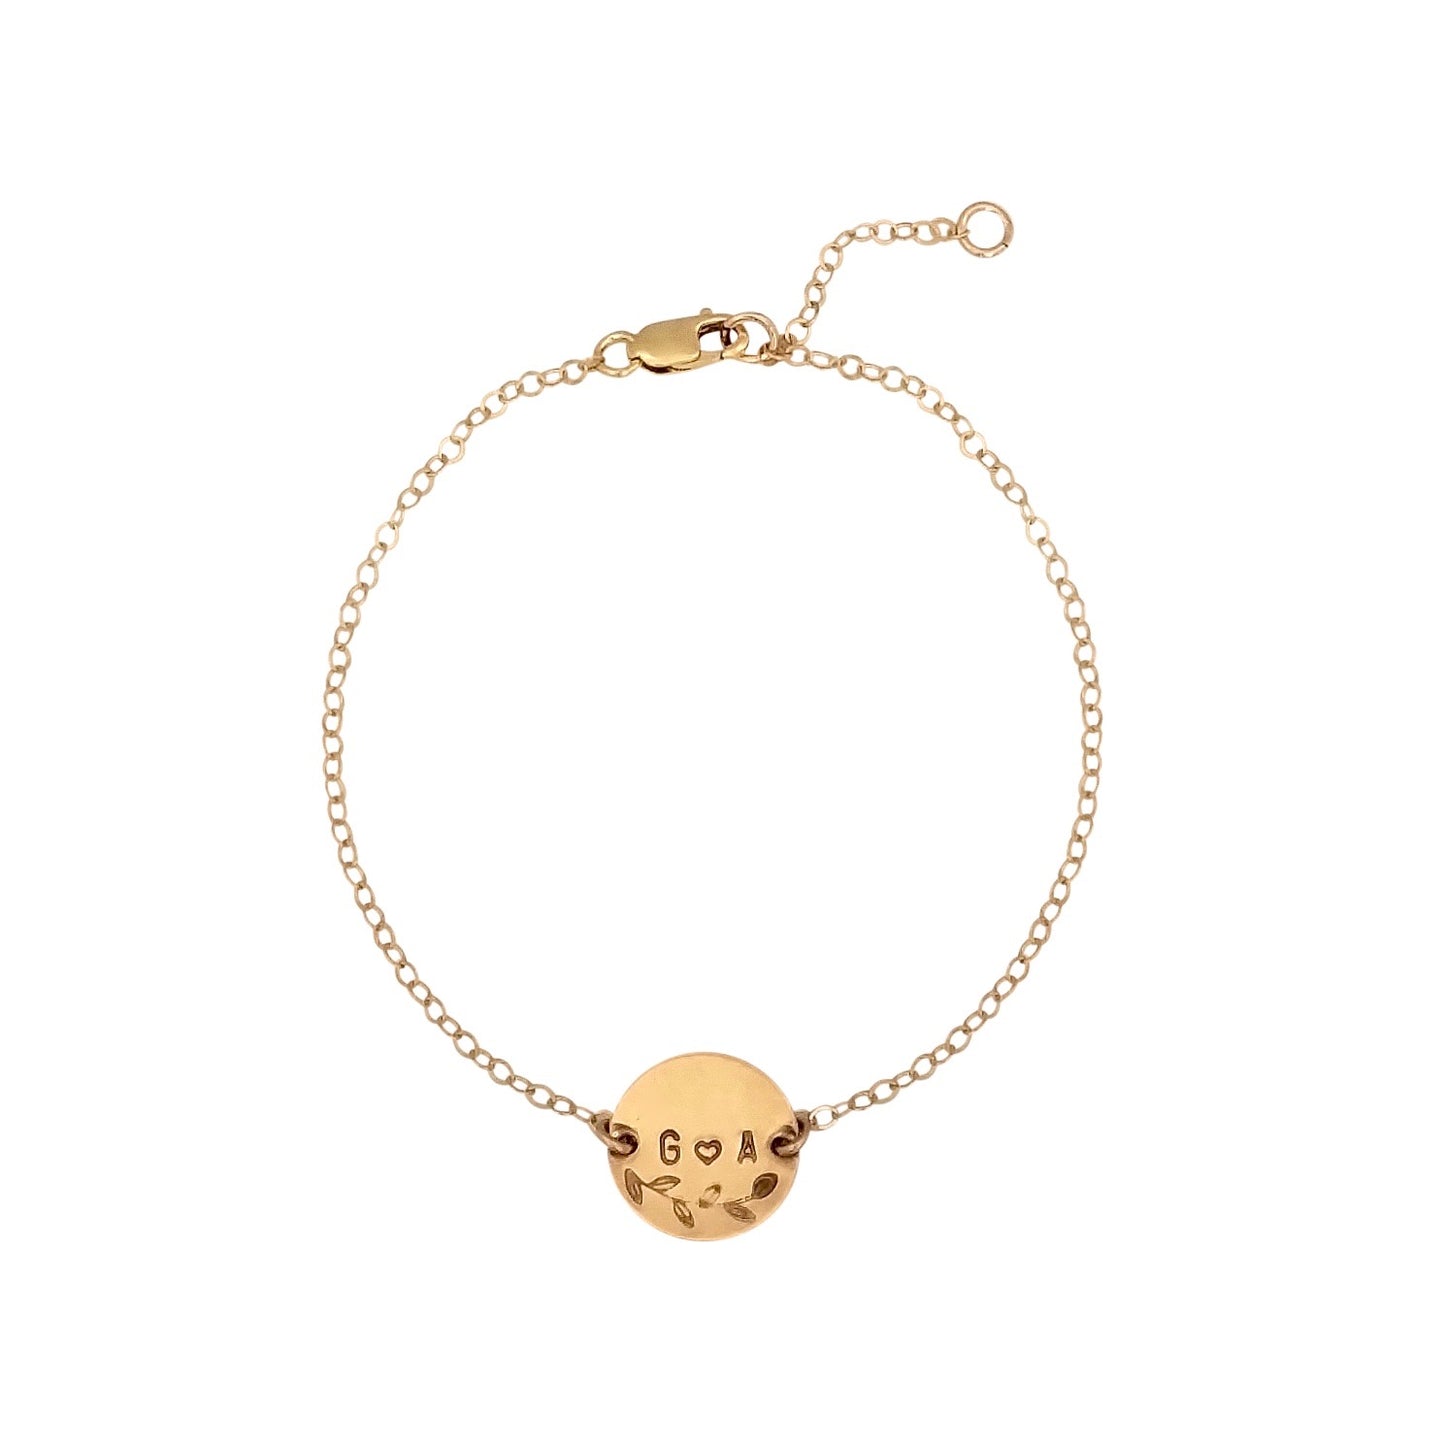 Personalised gold botanical design bracelet